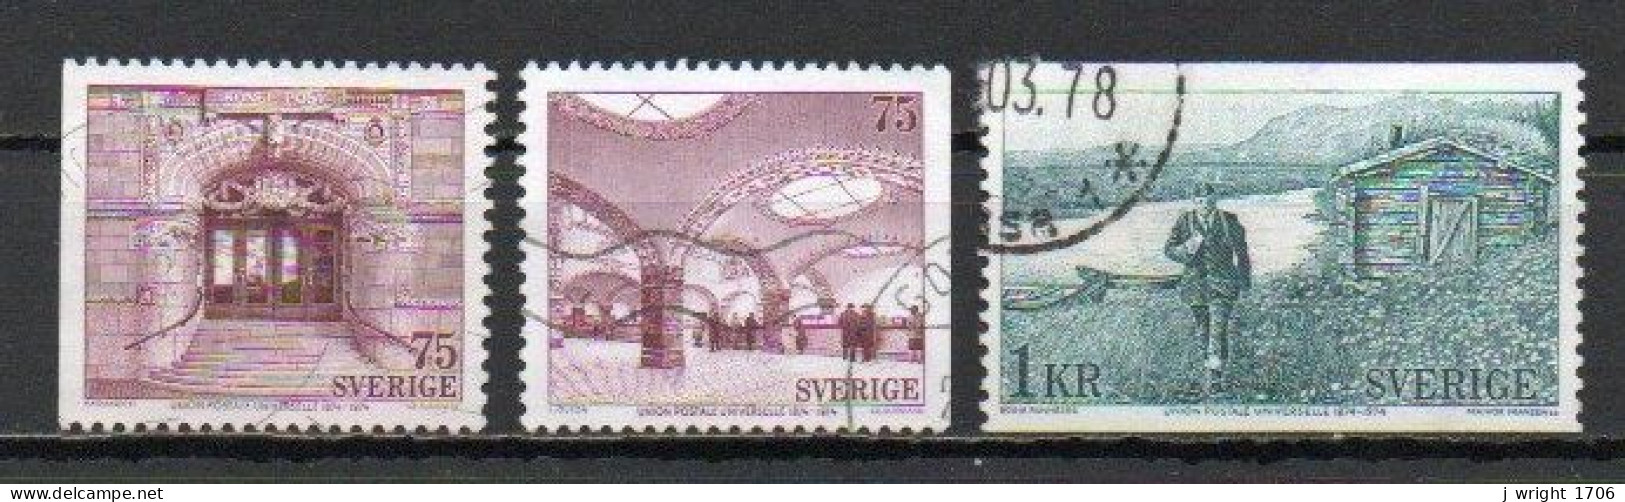 Sweden, 1974, UPU Centenary, Set, USED - Gebraucht